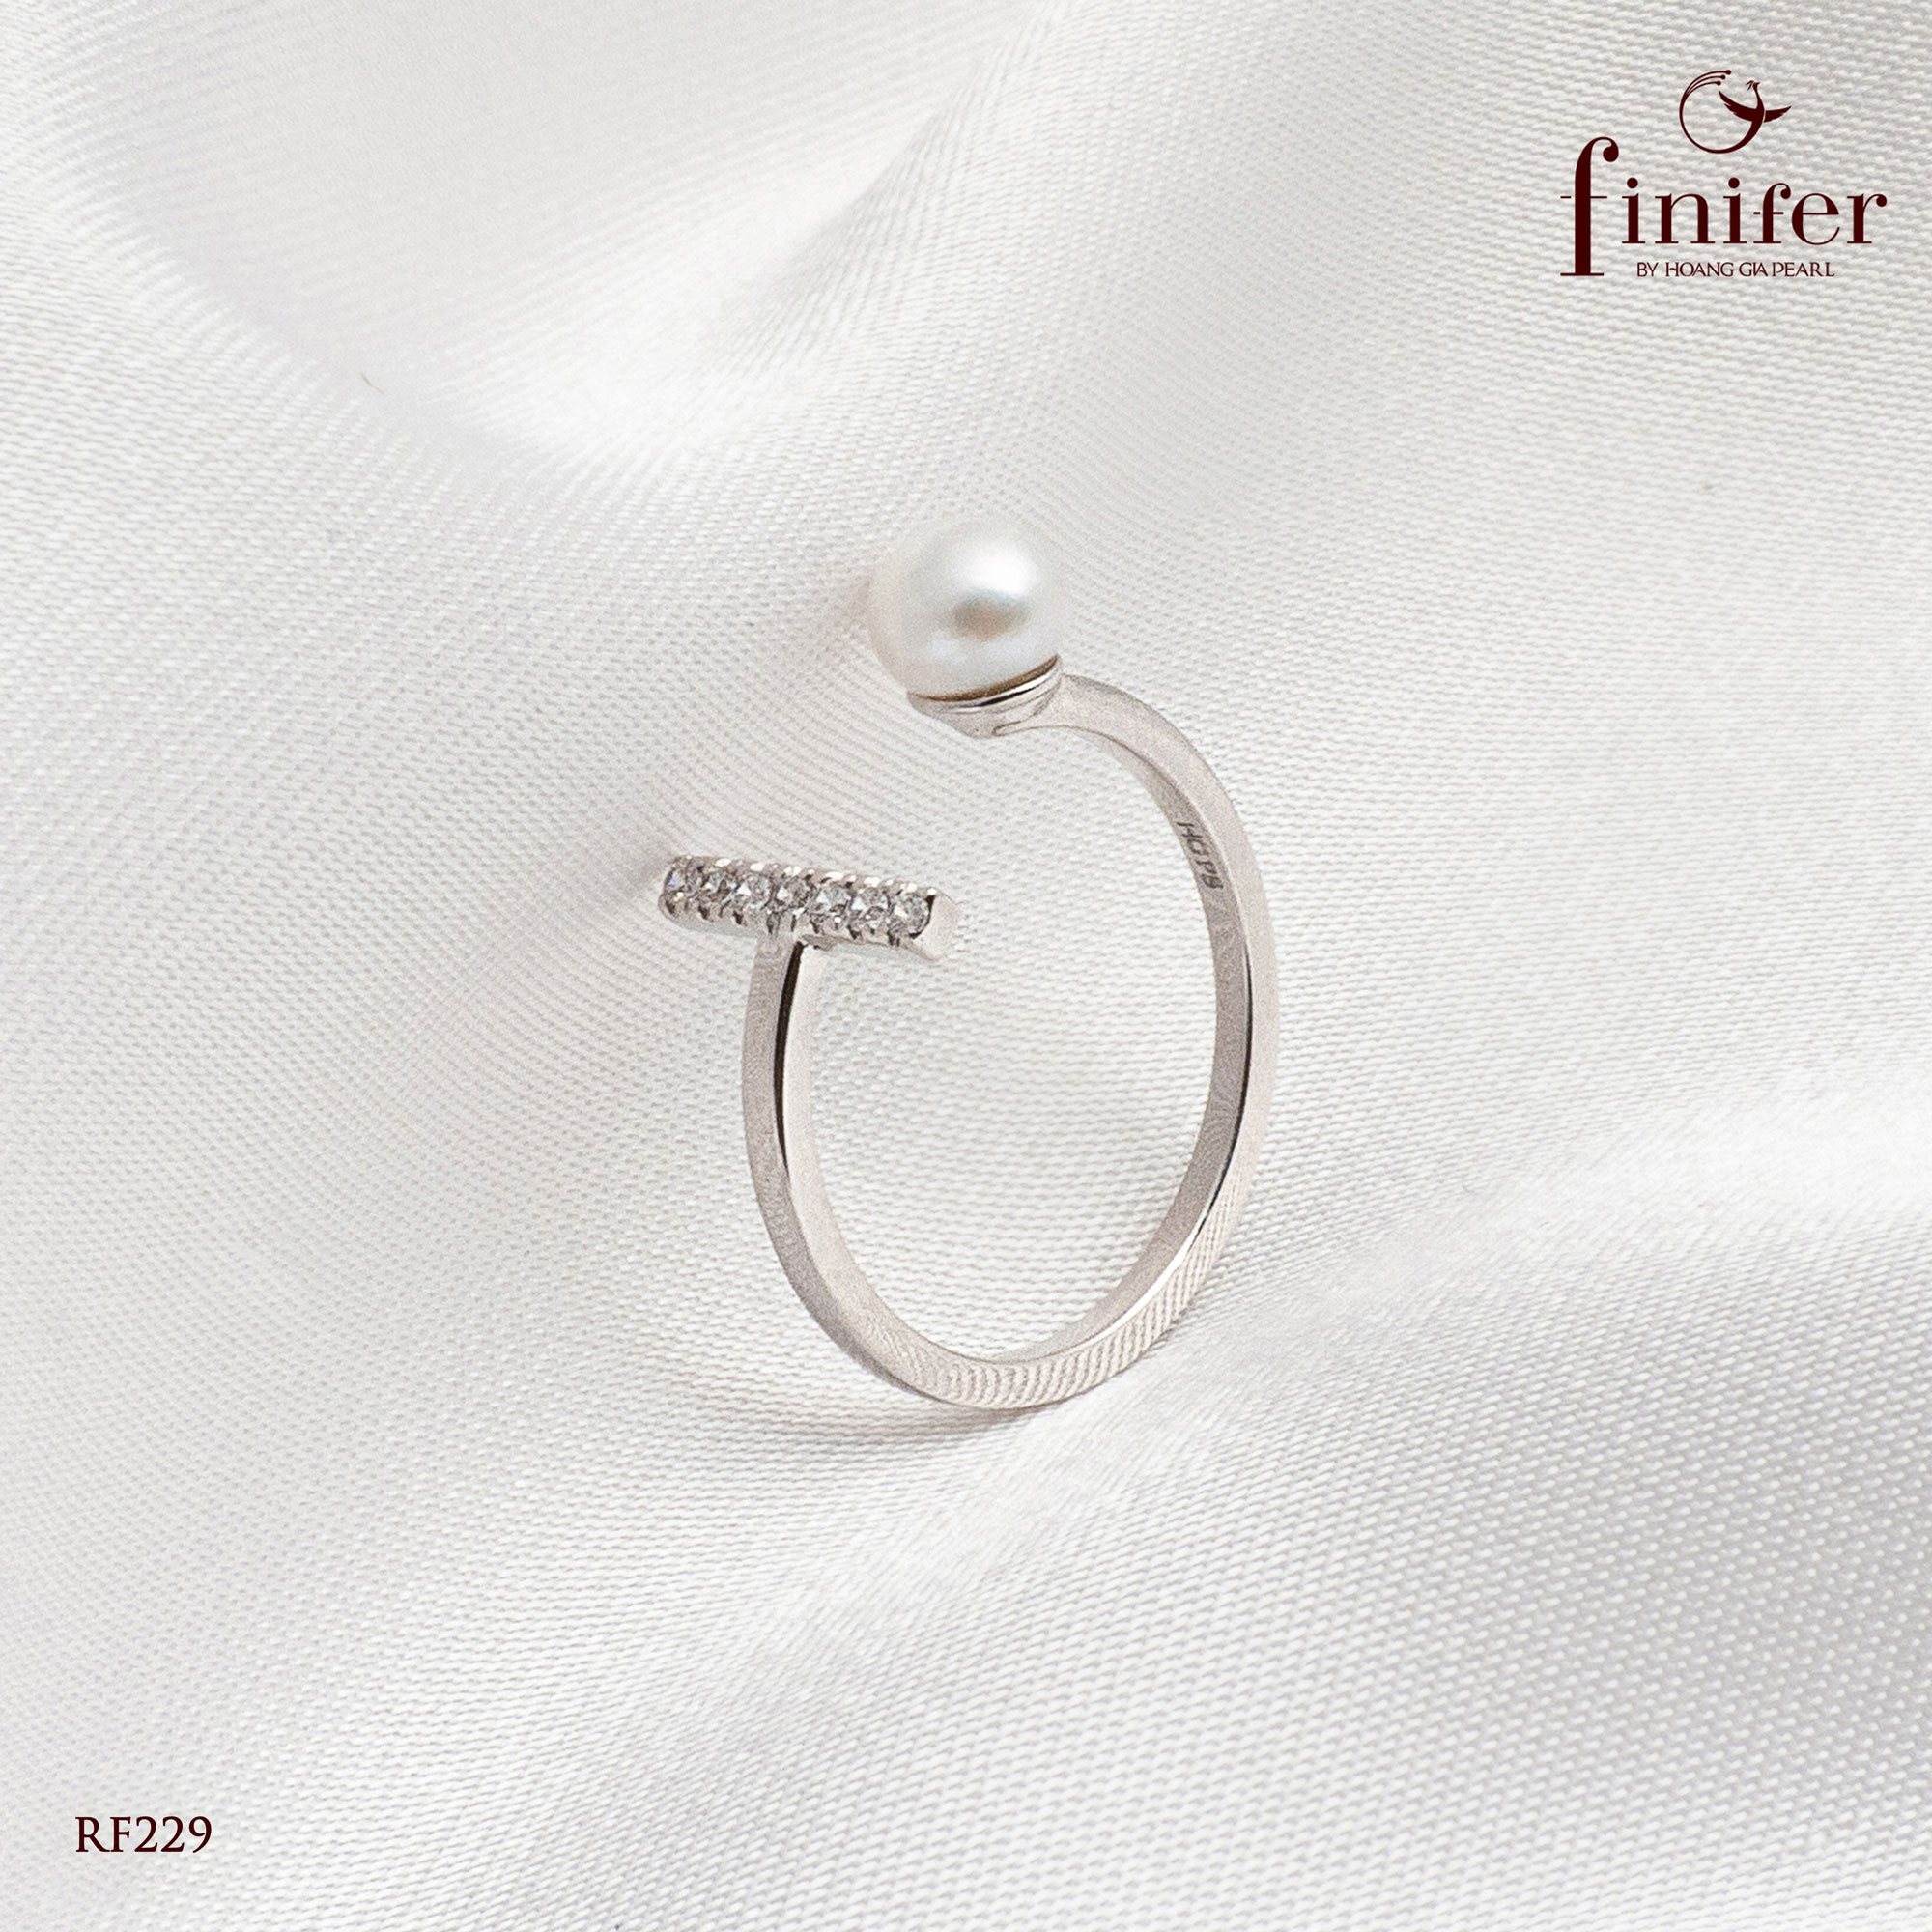 Nhẫn ngọc trai RF229 Finifer (L)